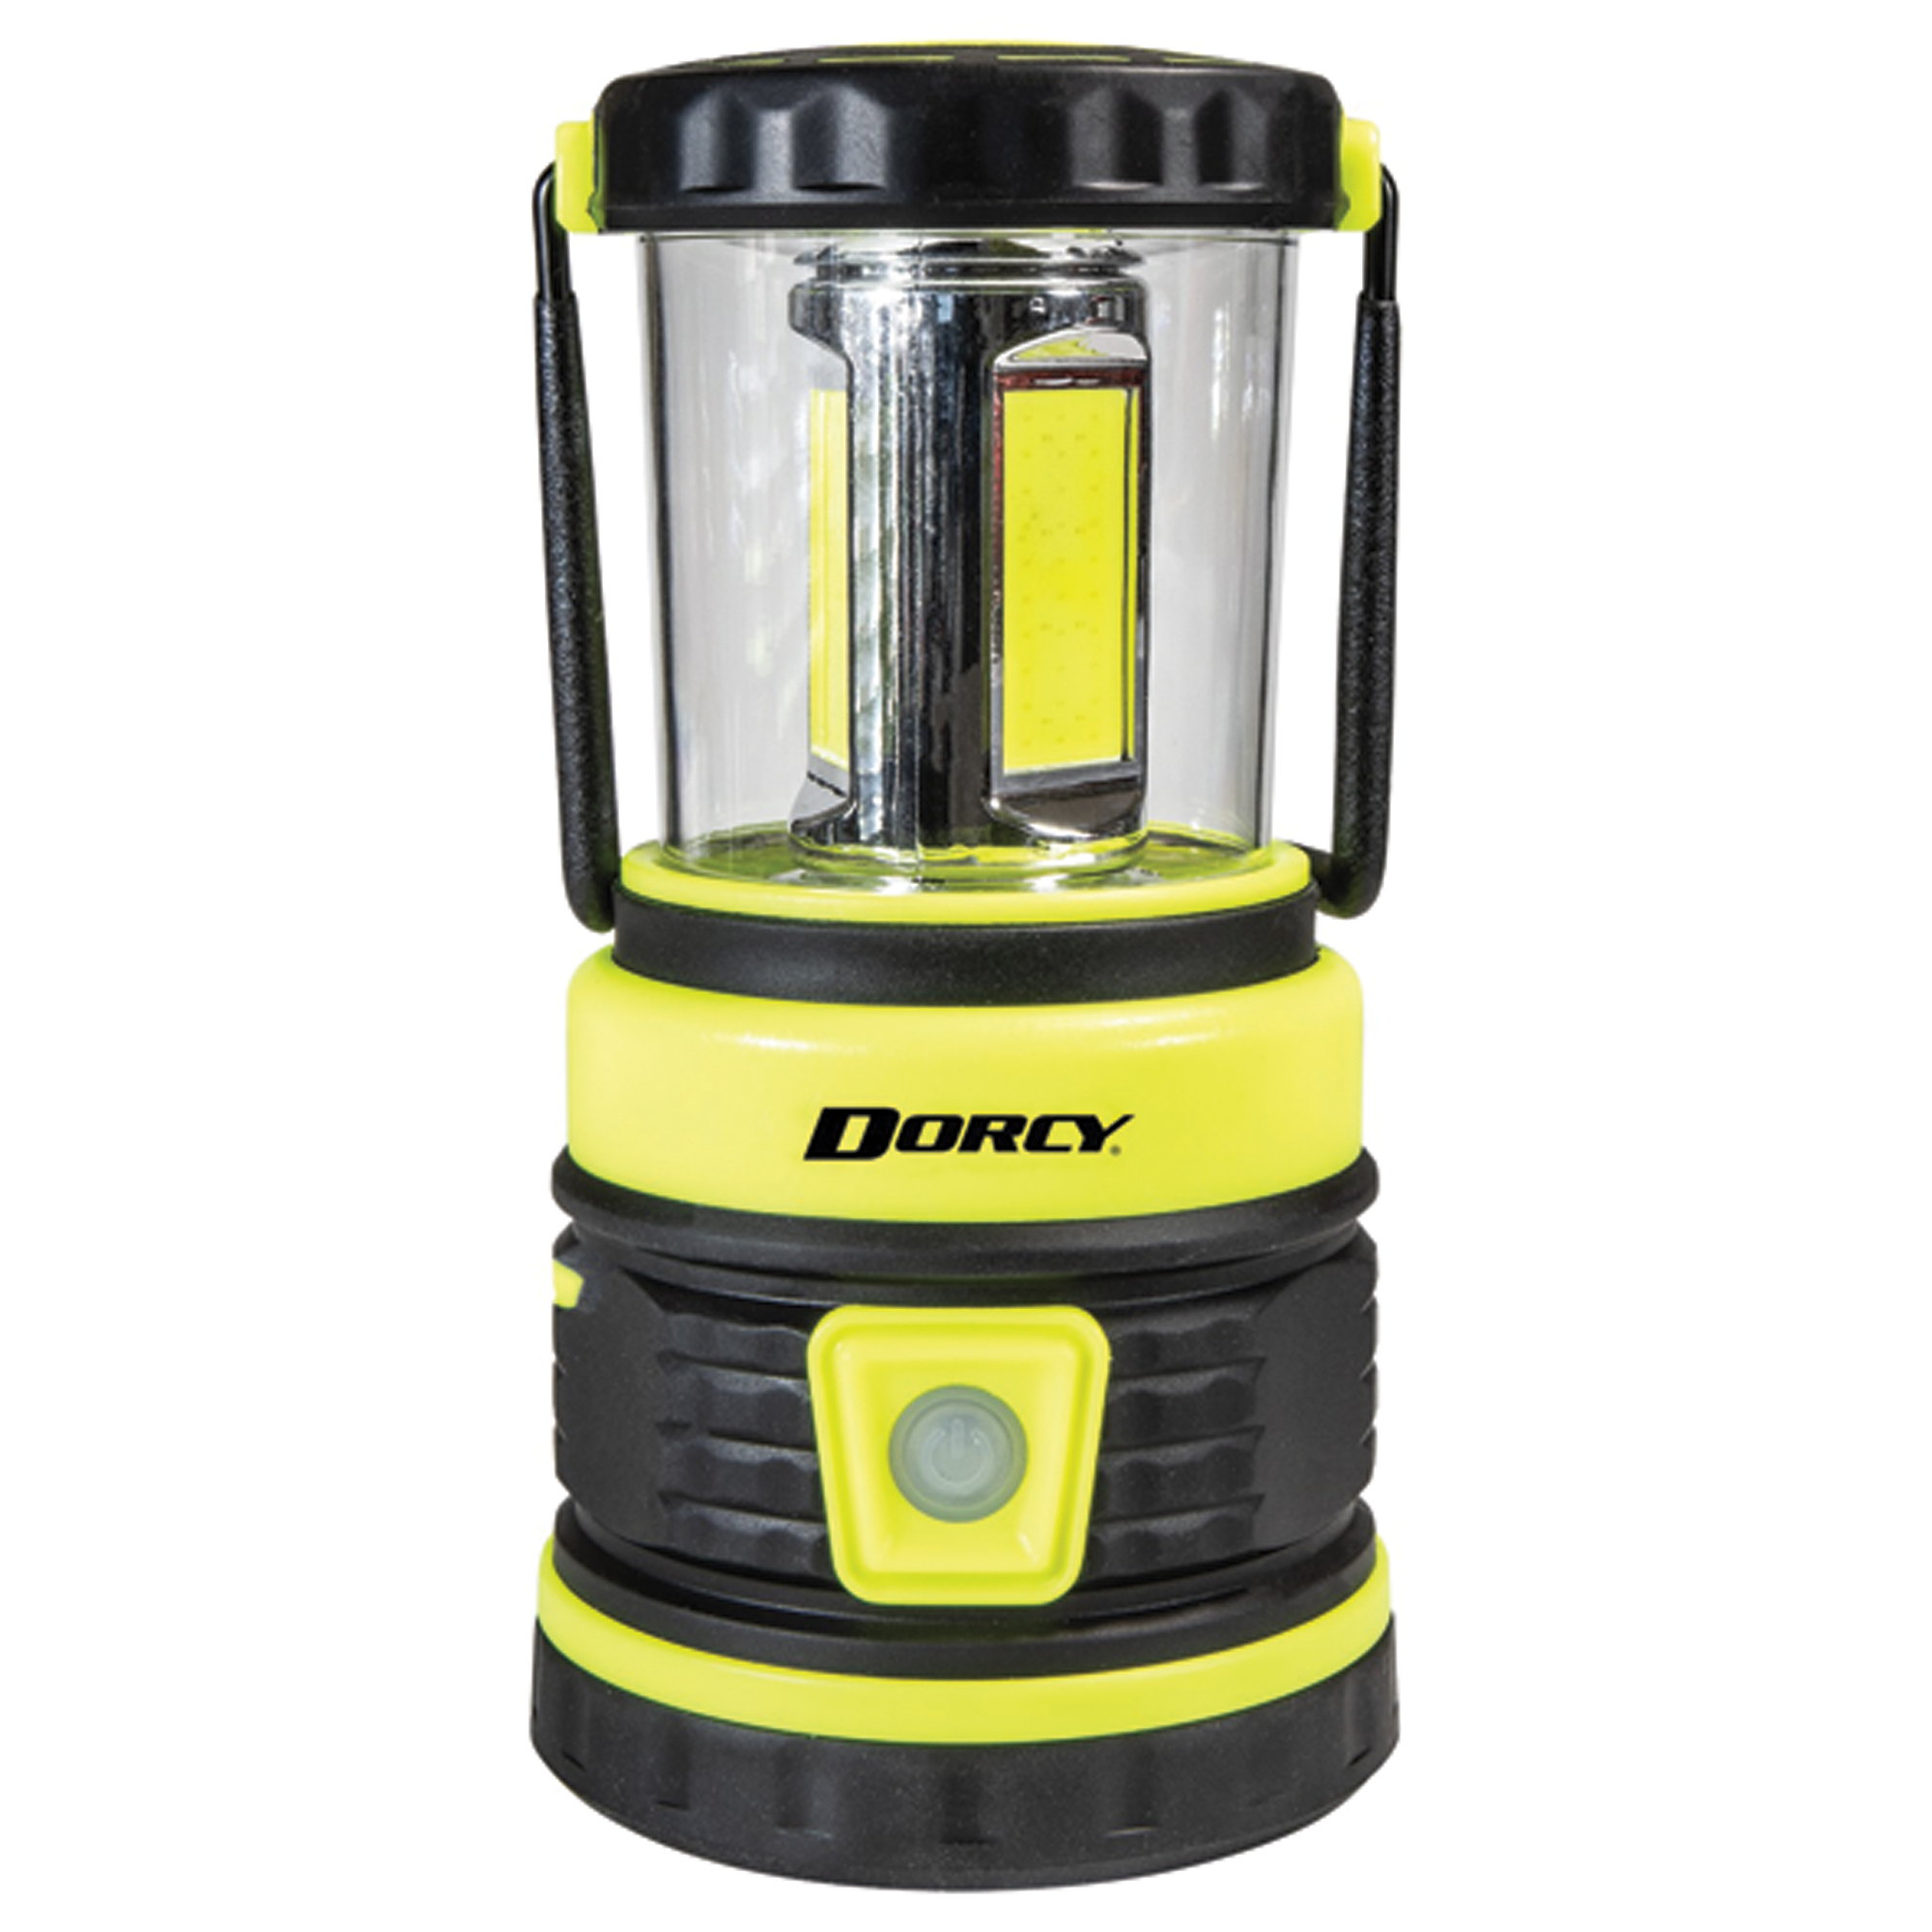 Dorcy, Rechargeable Adventure Lantern, Light Output 1800 lumen, Light Bulb Type LED, Watts 20 Model 41-3125